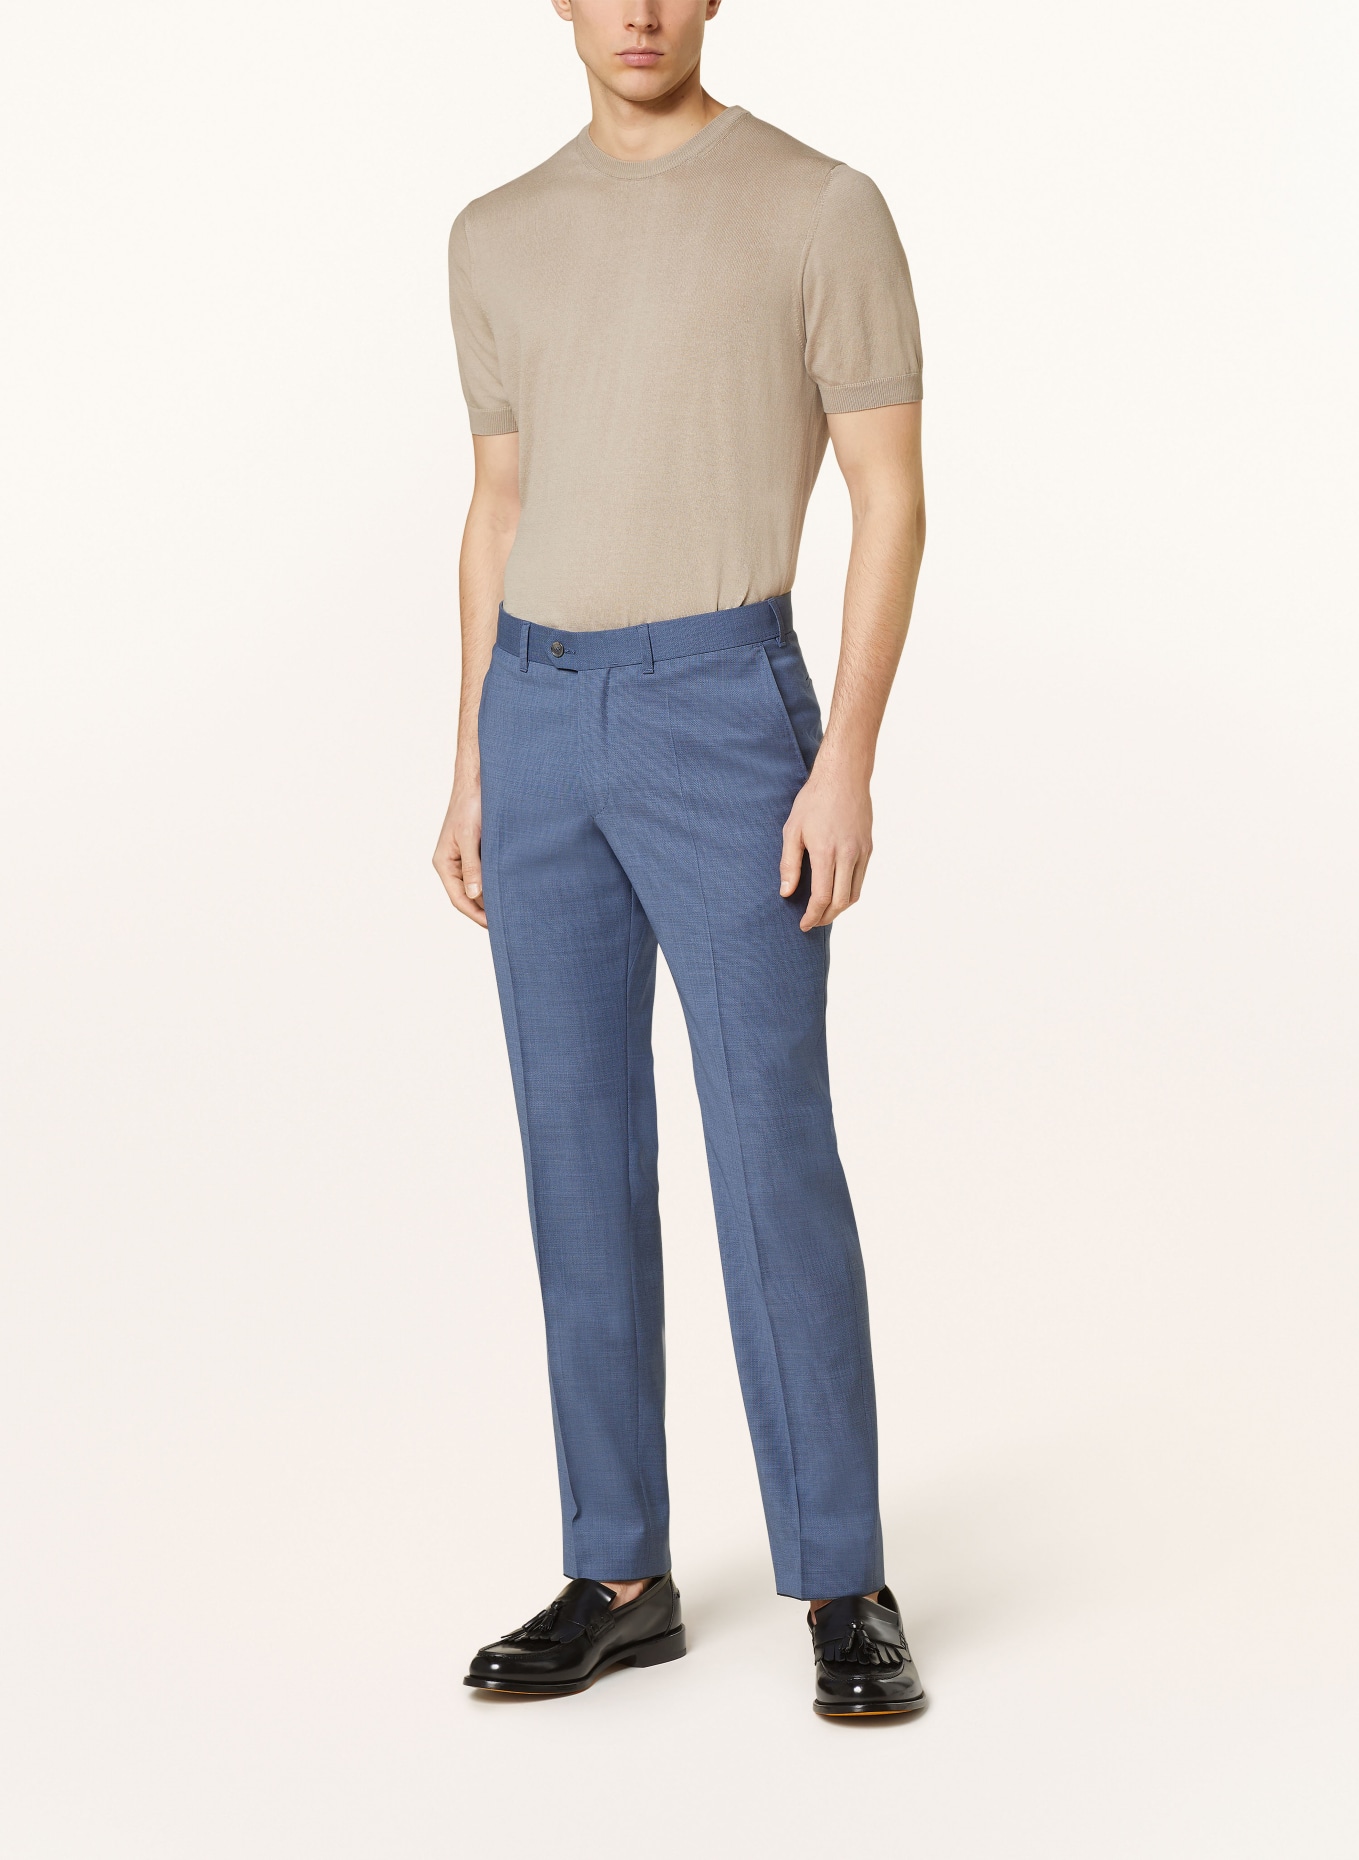 EDUARD DRESSLER Anzughose Slim Fit, Farbe: 036 hellblau (Bild 3)